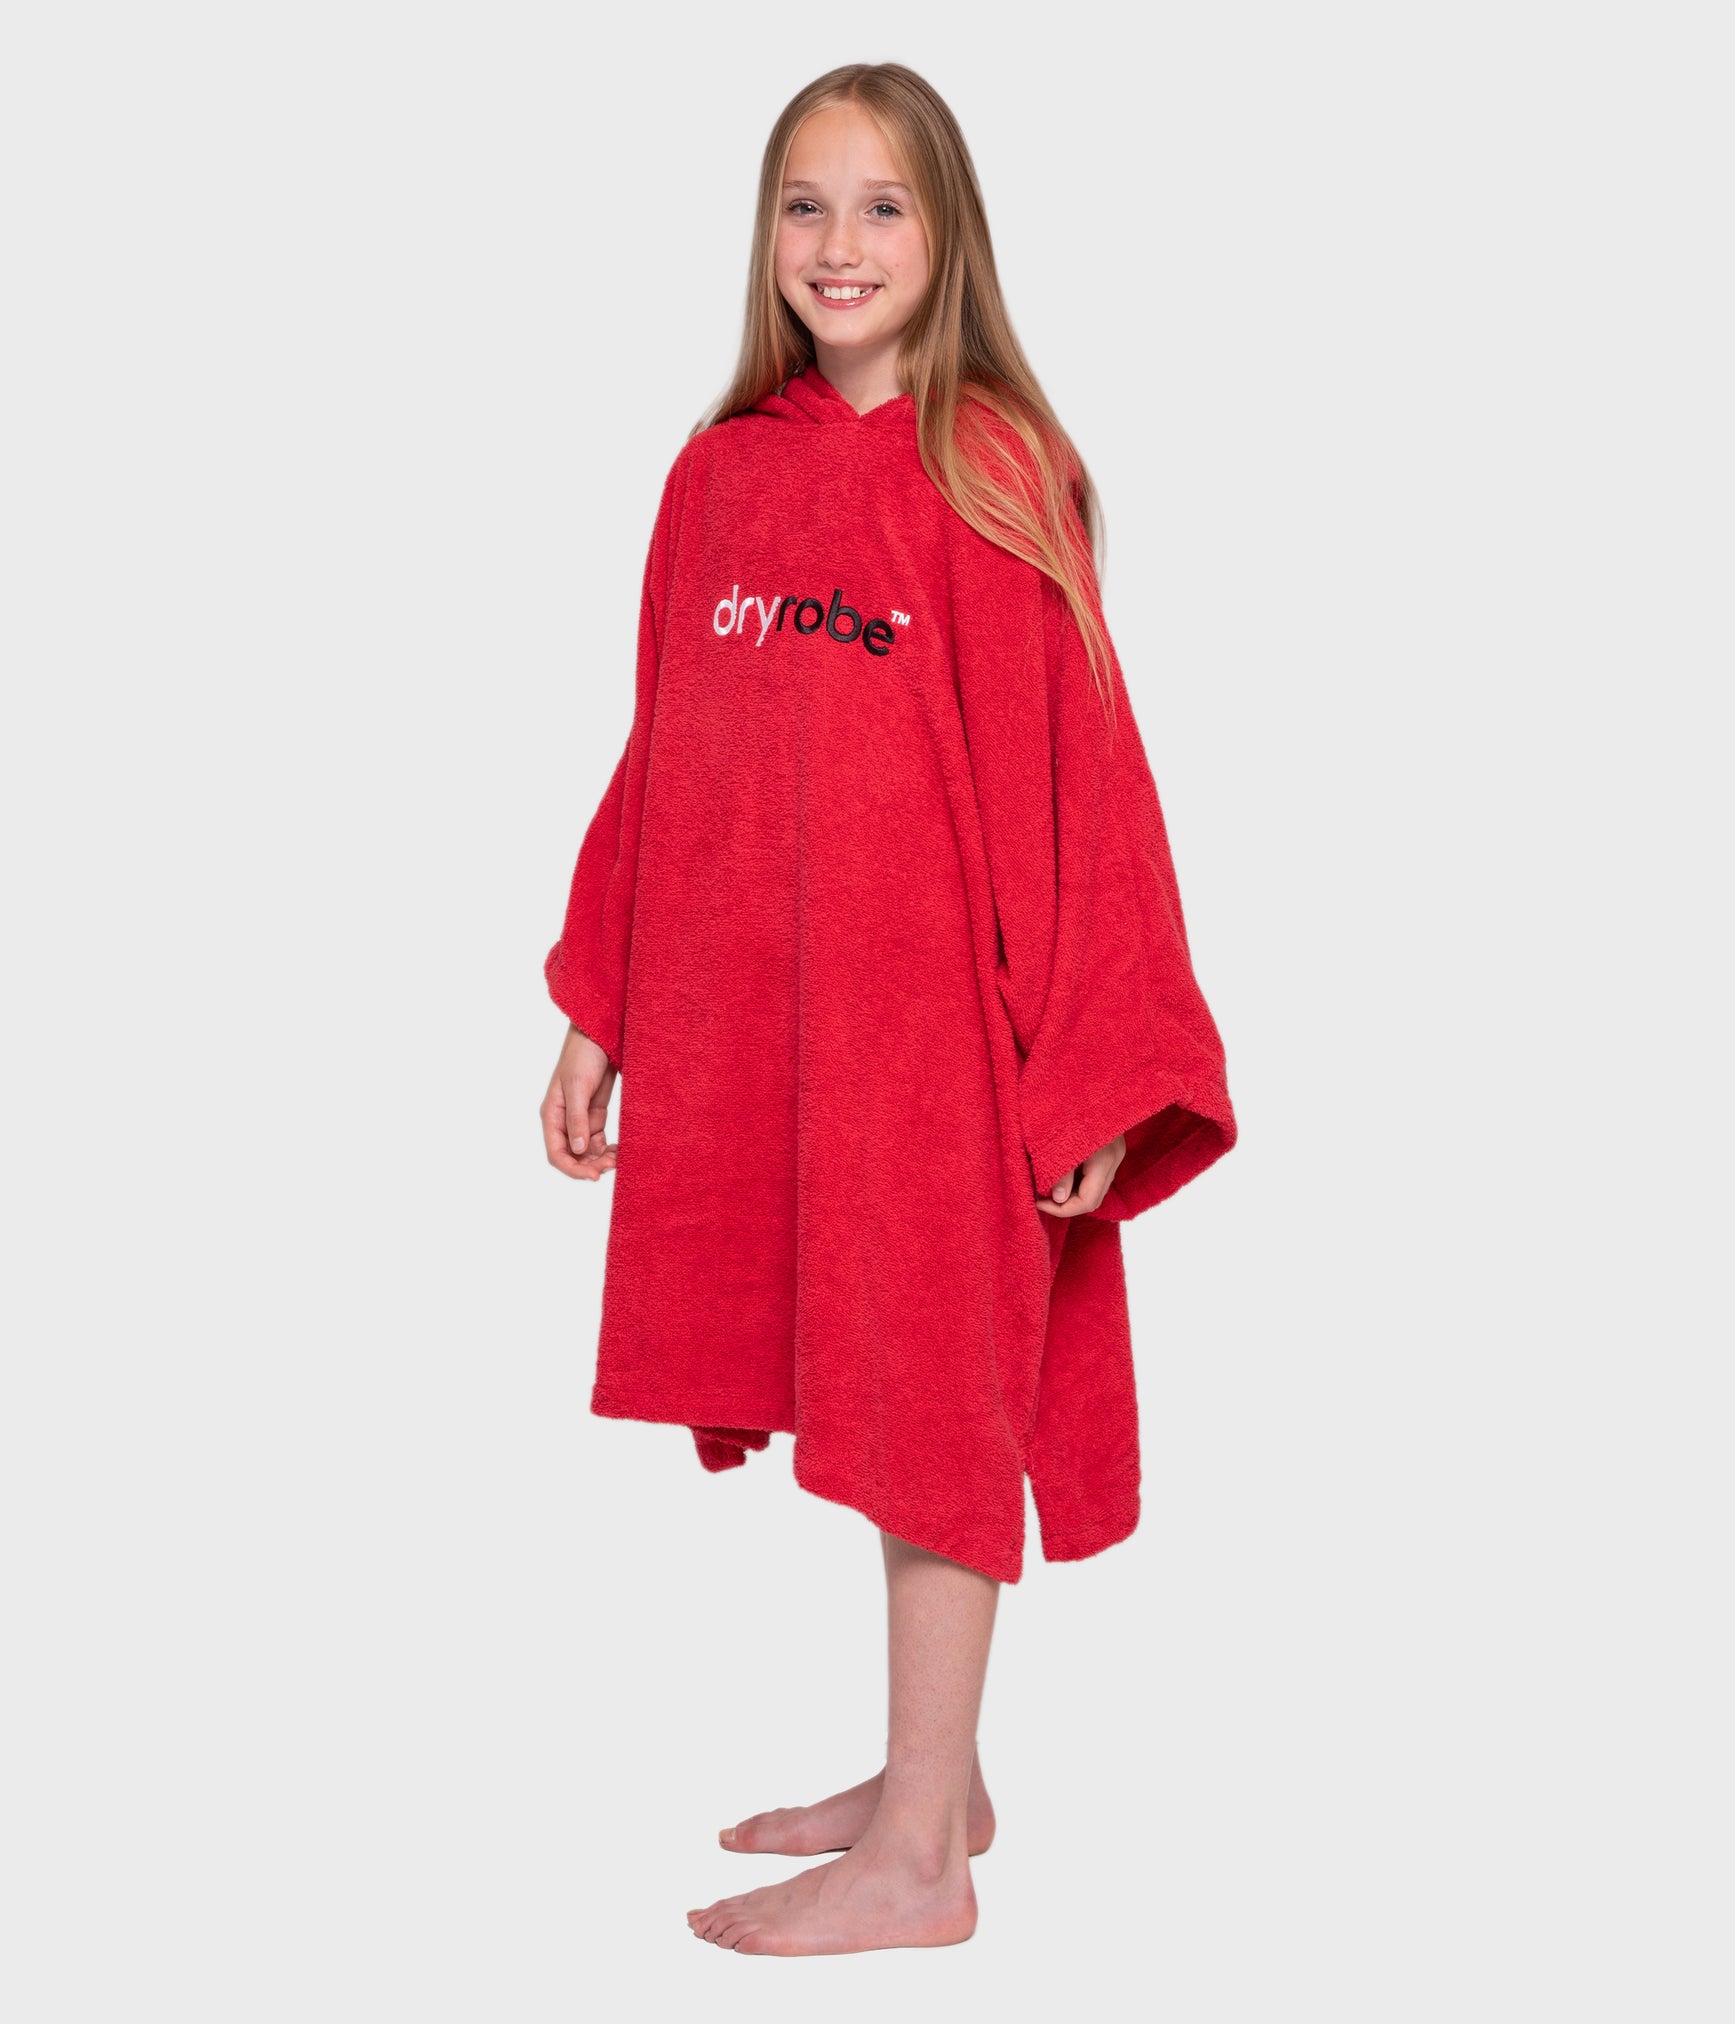 Kids Organic Cotton Towel dryrobe® Red